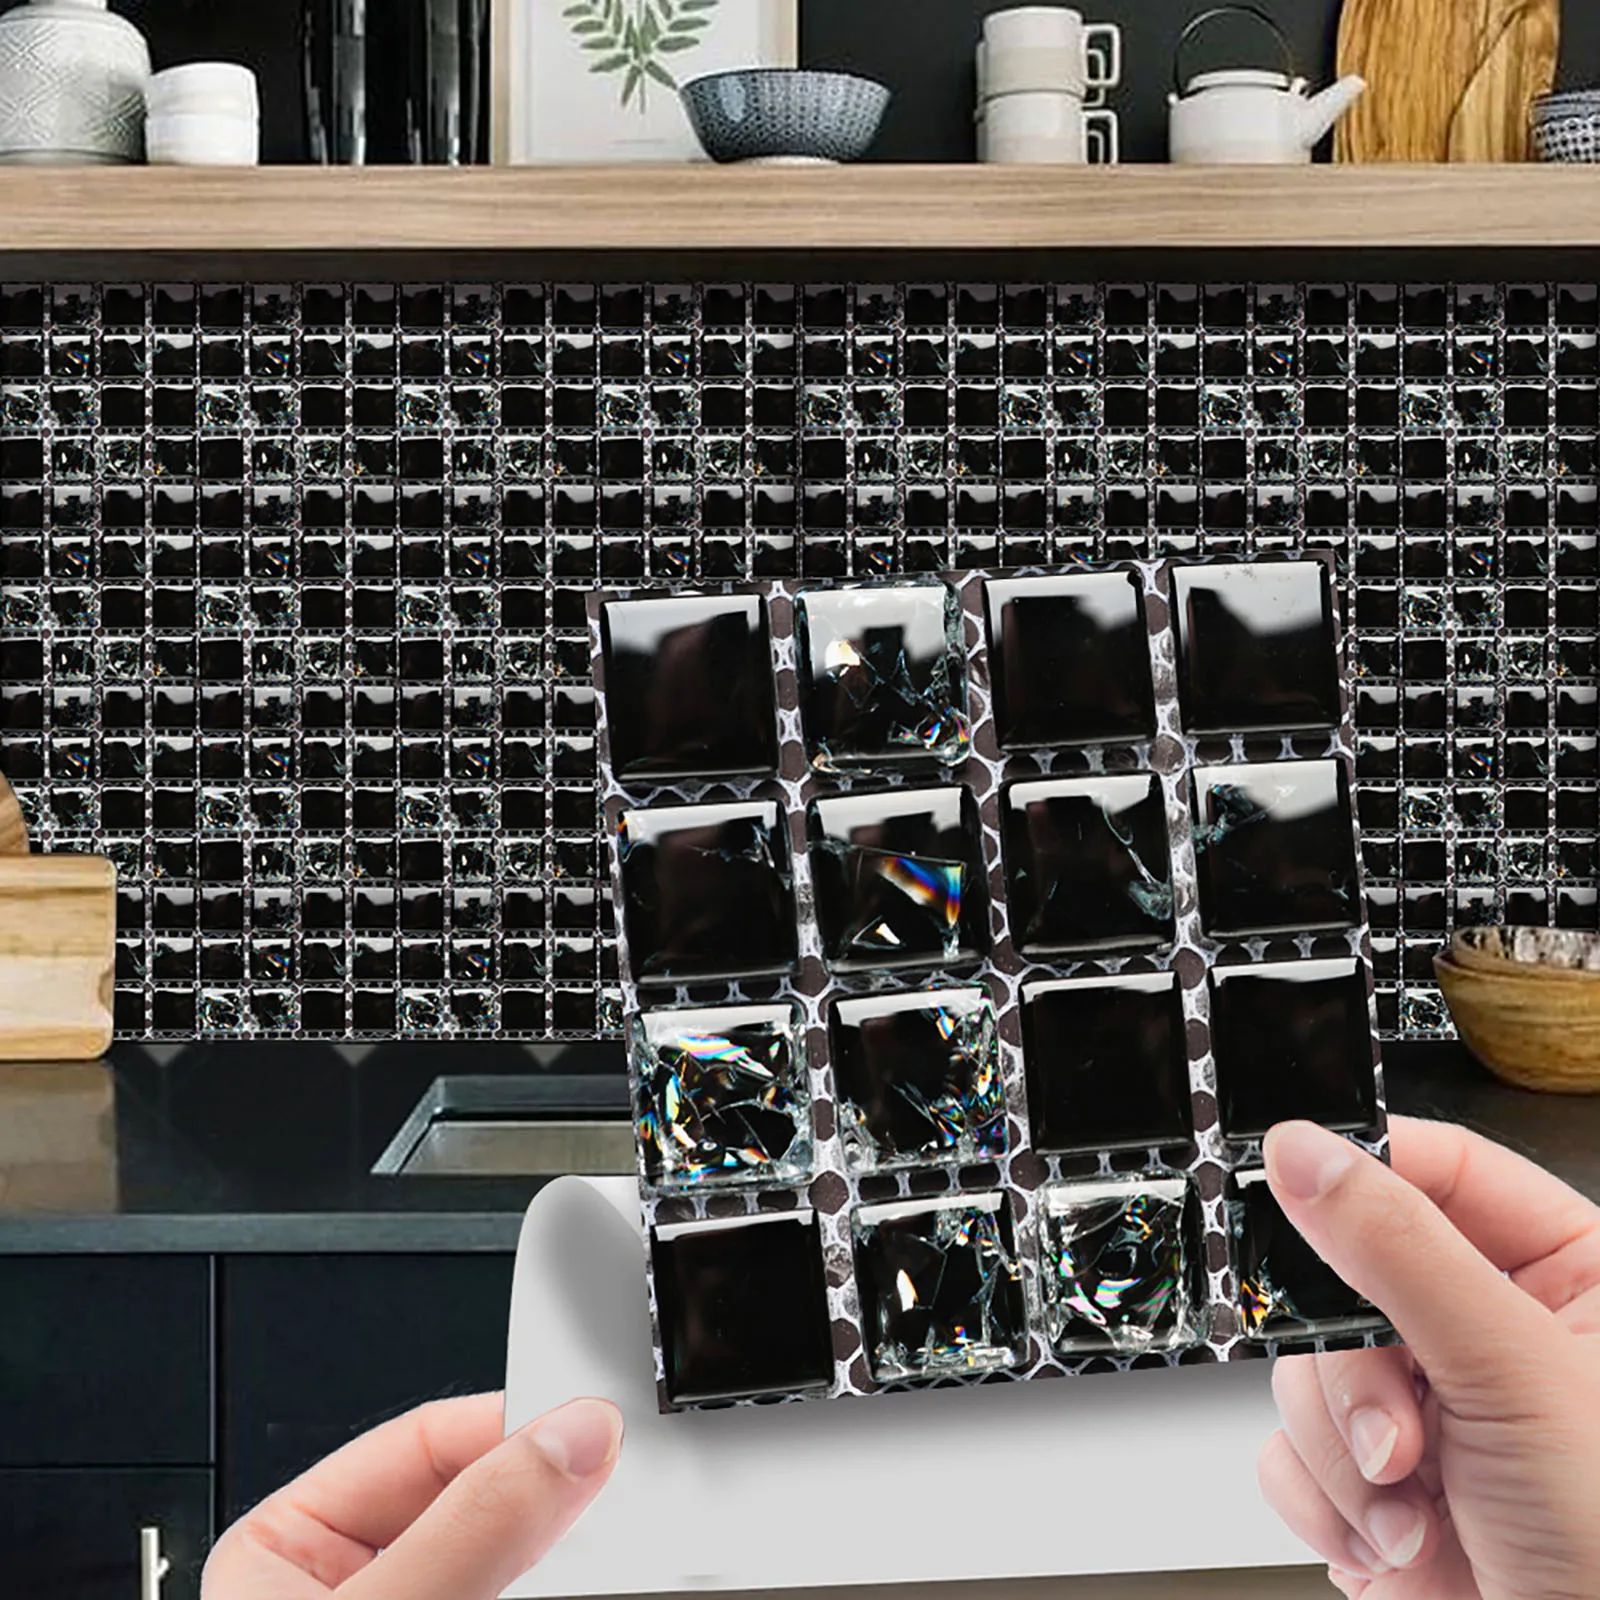 10pc Kitchen Tile Stickers Bathroom Mosaic Sticker Selfadhesive Home Wall Decor